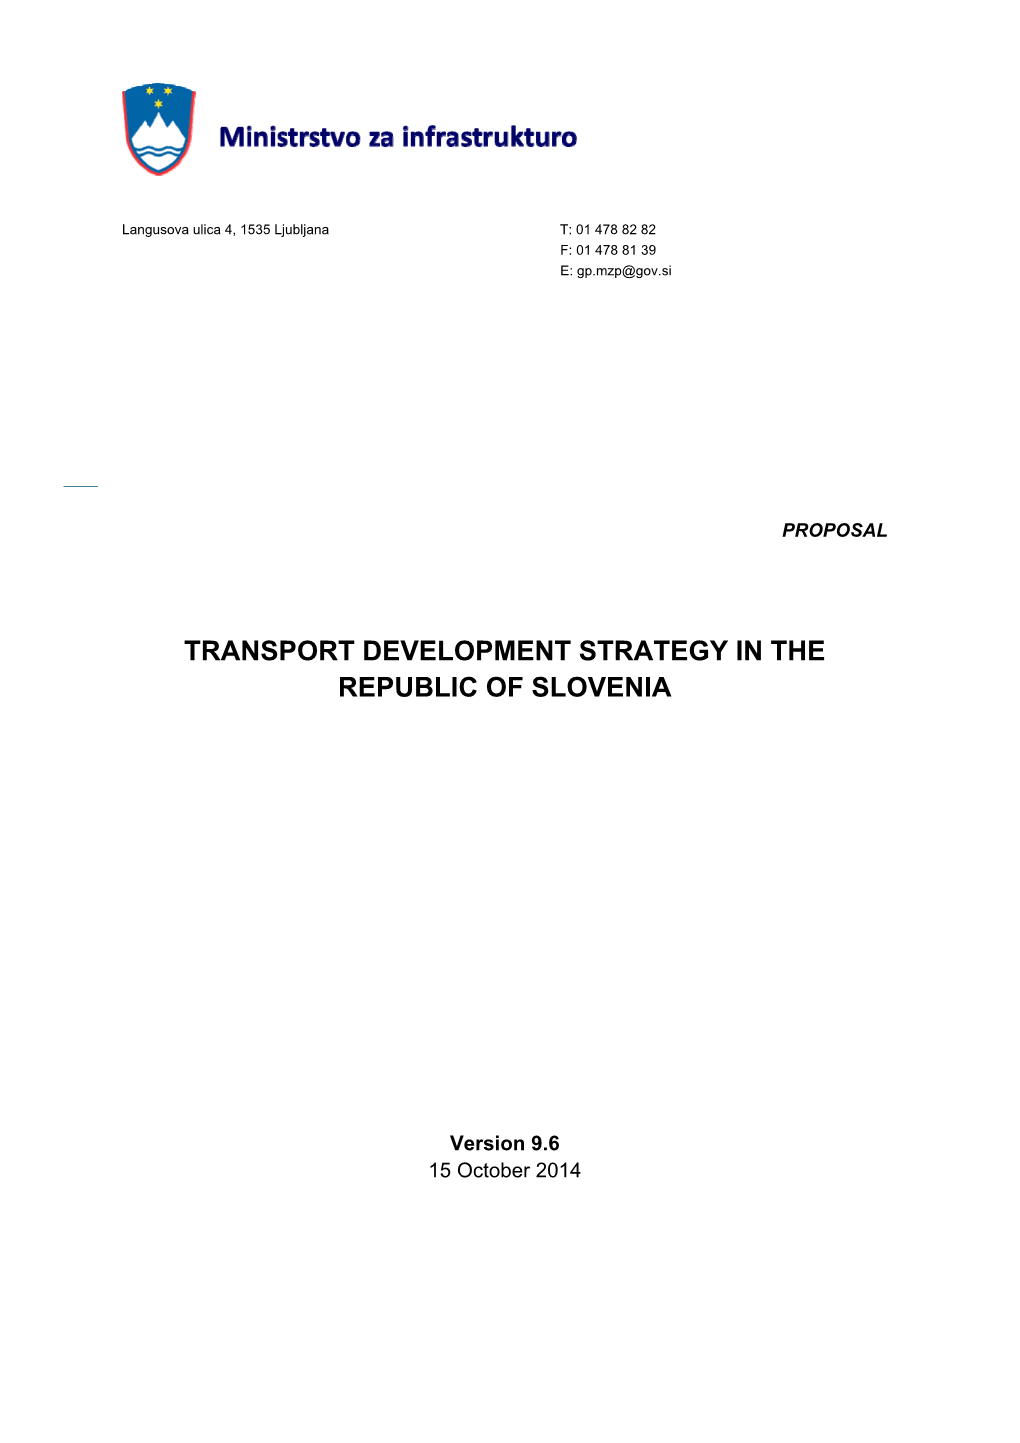 Transport Development Strategy in the Republic of Slovenia